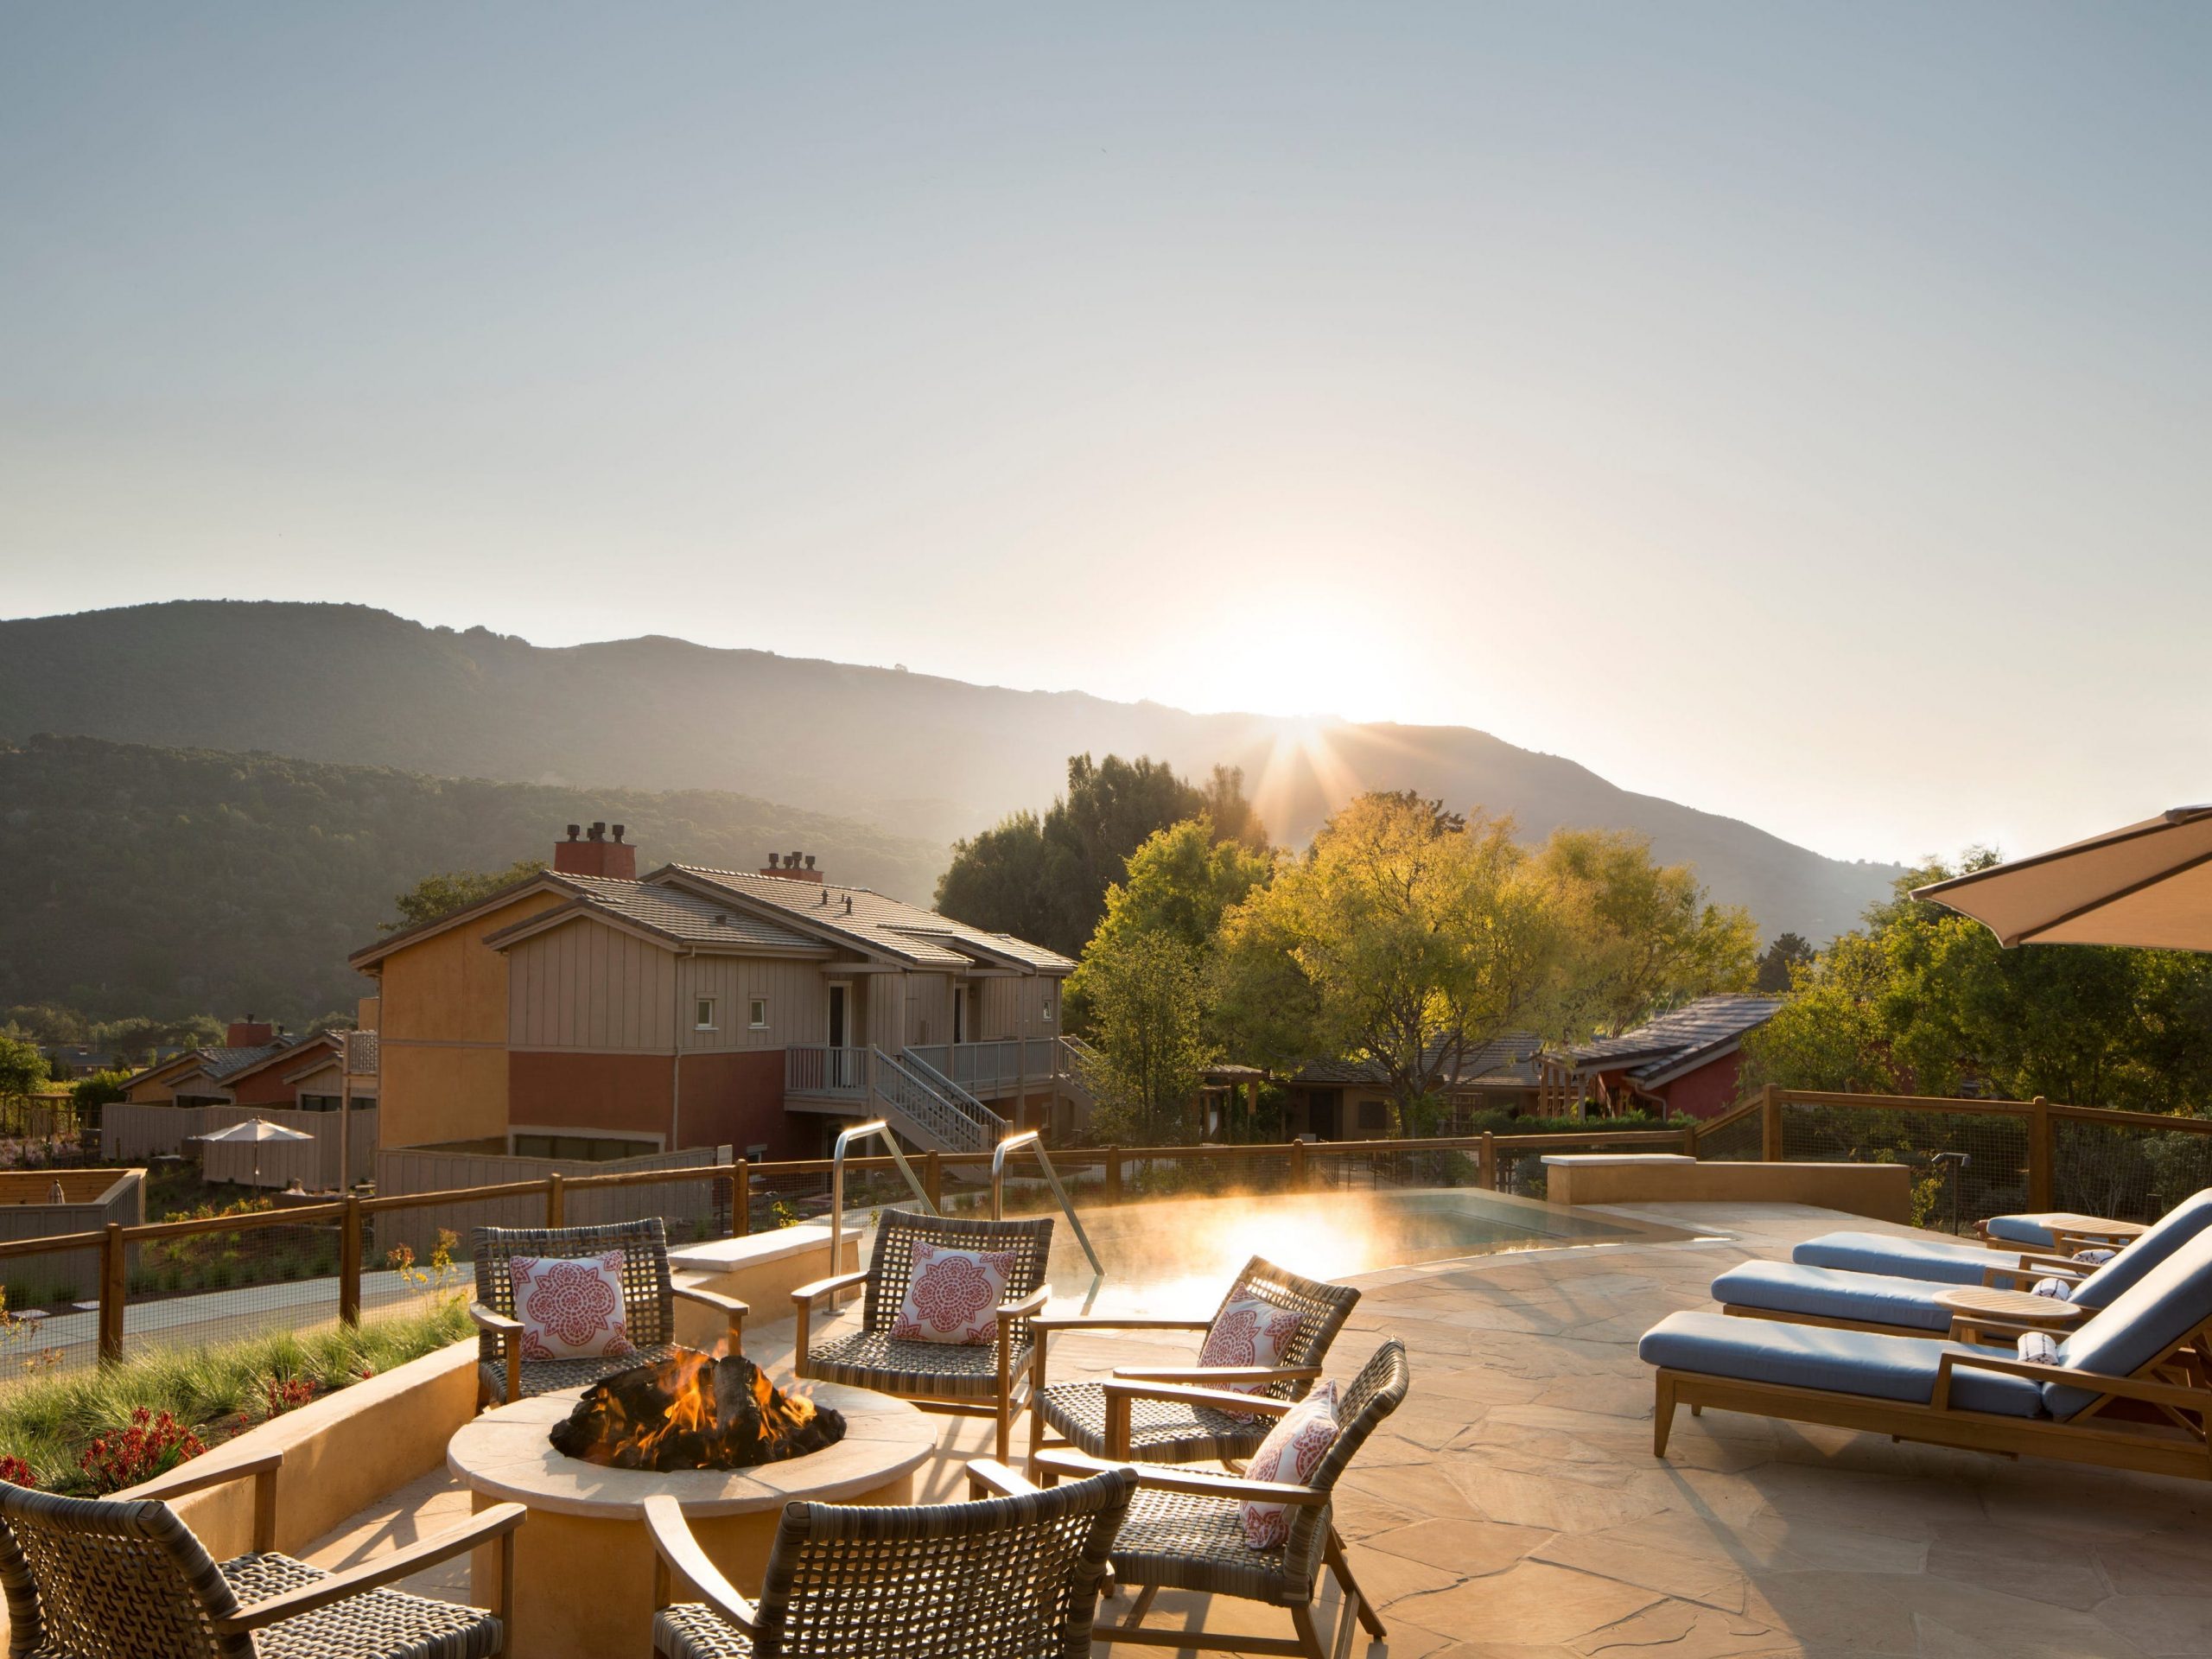 Bernardus Lodge & Spa in Carmel Valley, California